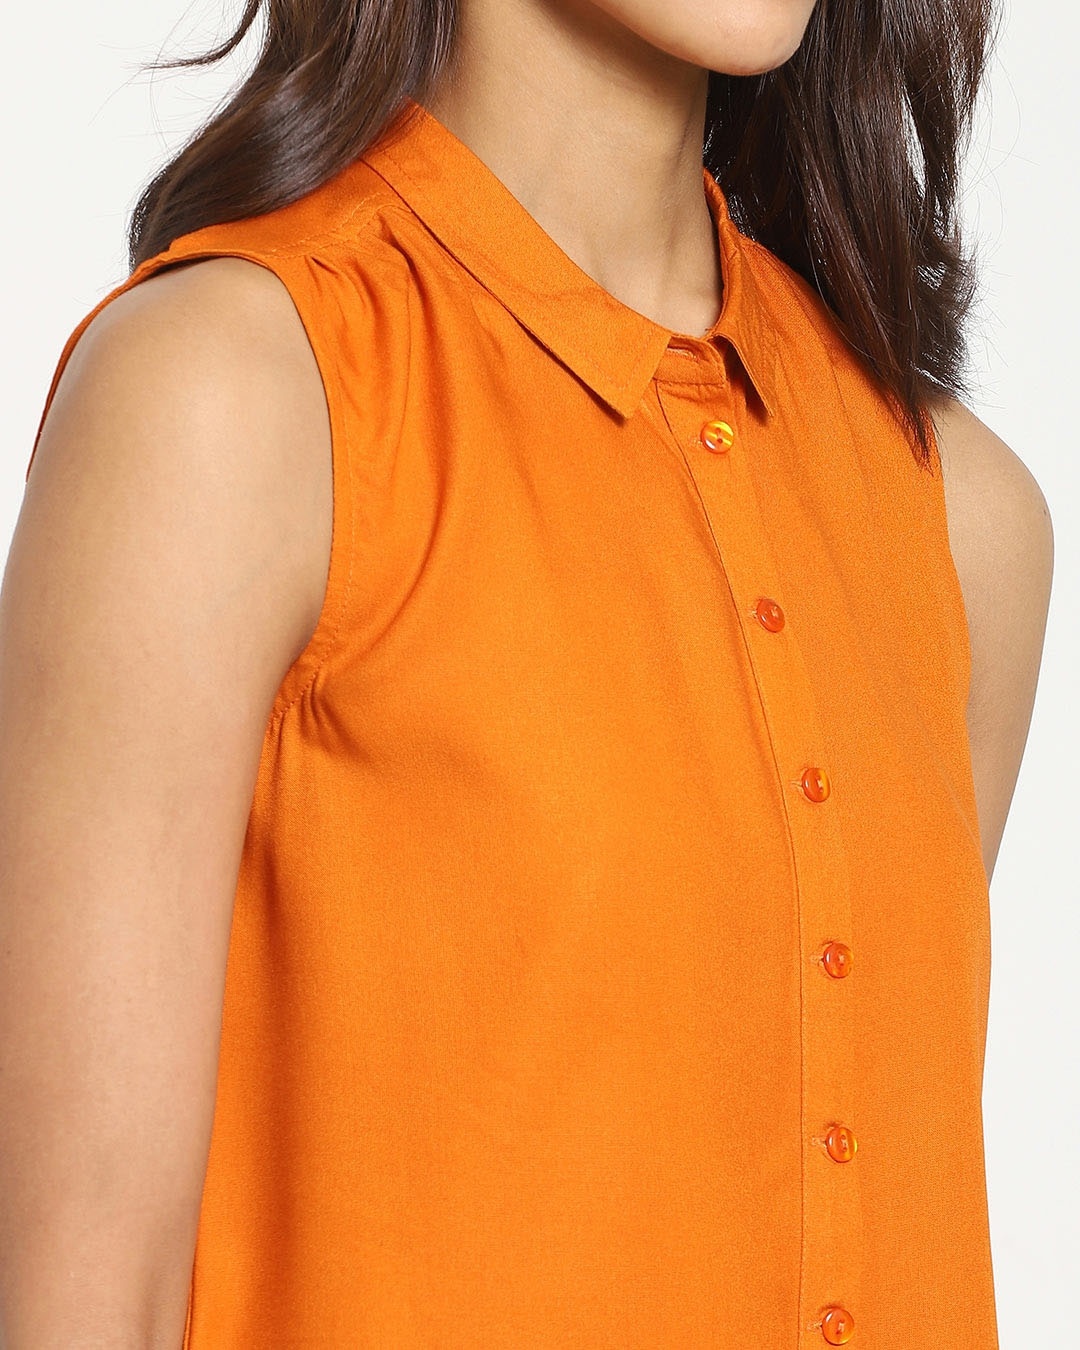 Shop Women's Orange Shirt